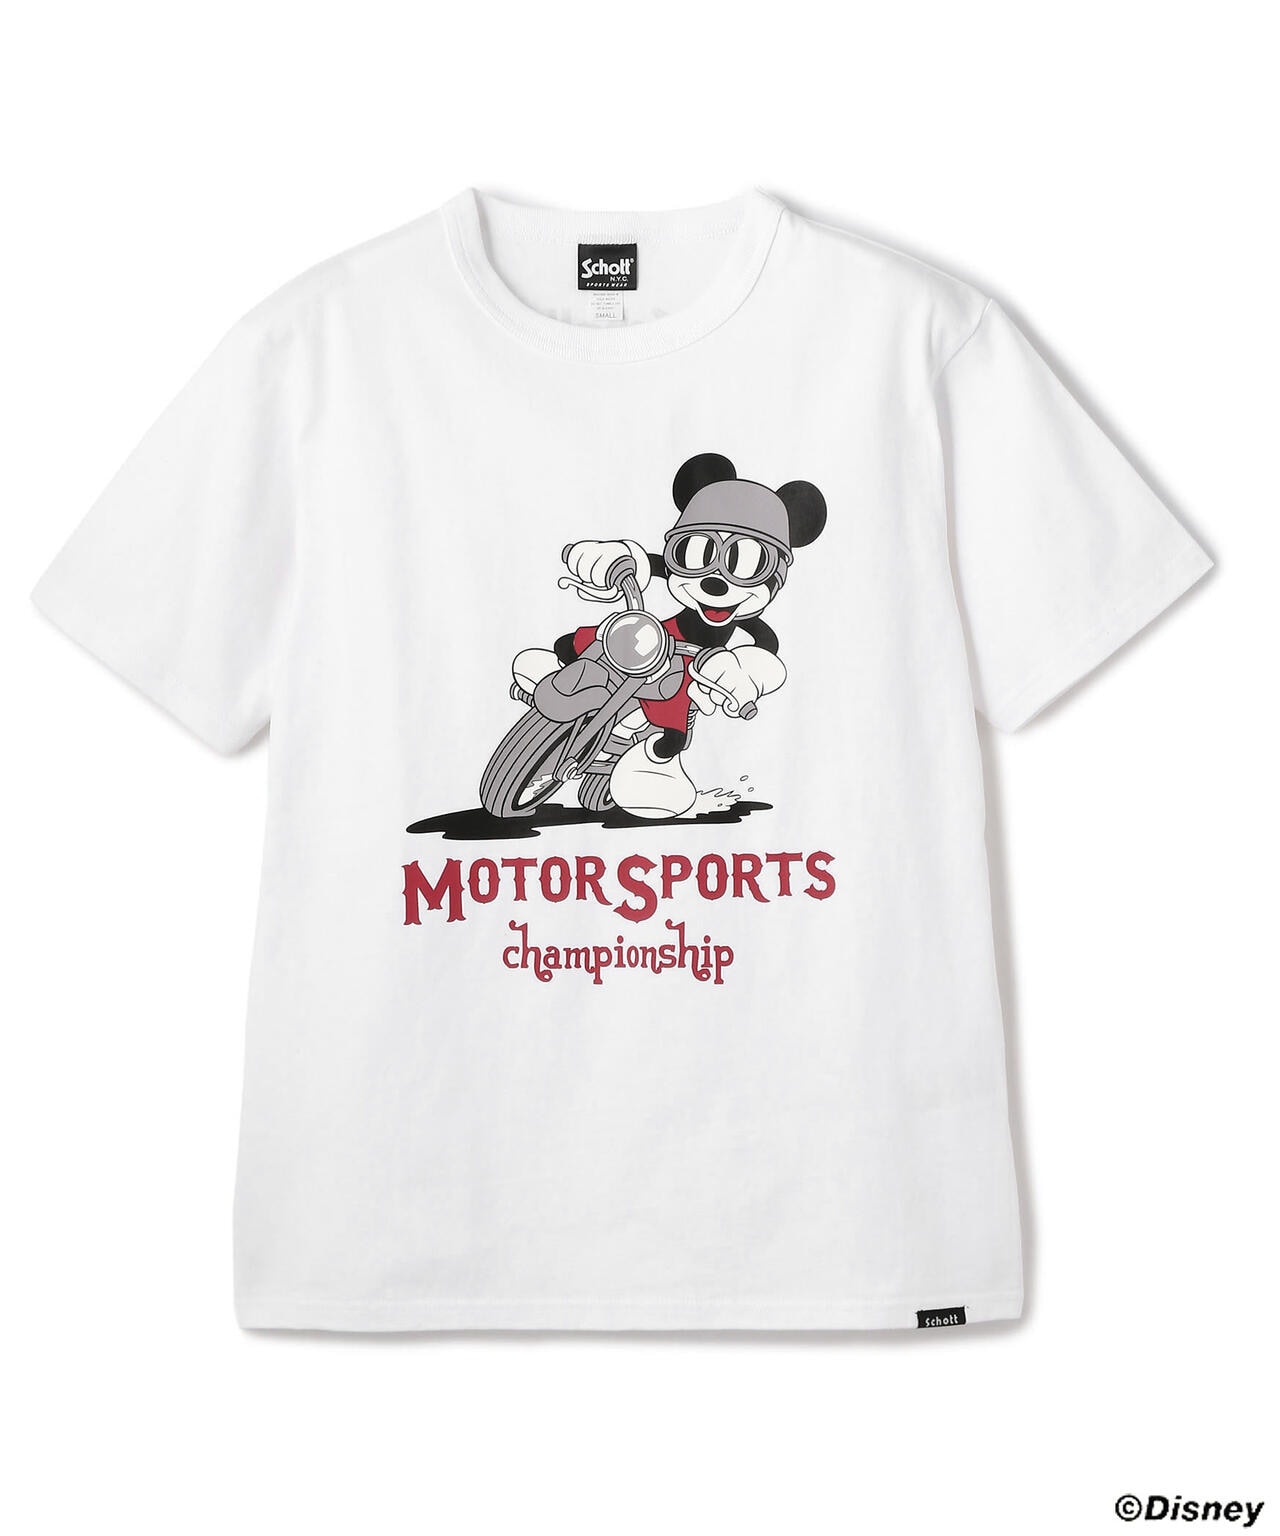 Disney ディズニー Motor Sports Chmpionship モータースポーツチャンピオンシップ Schott ショット Us Online Store Us オンラインストア